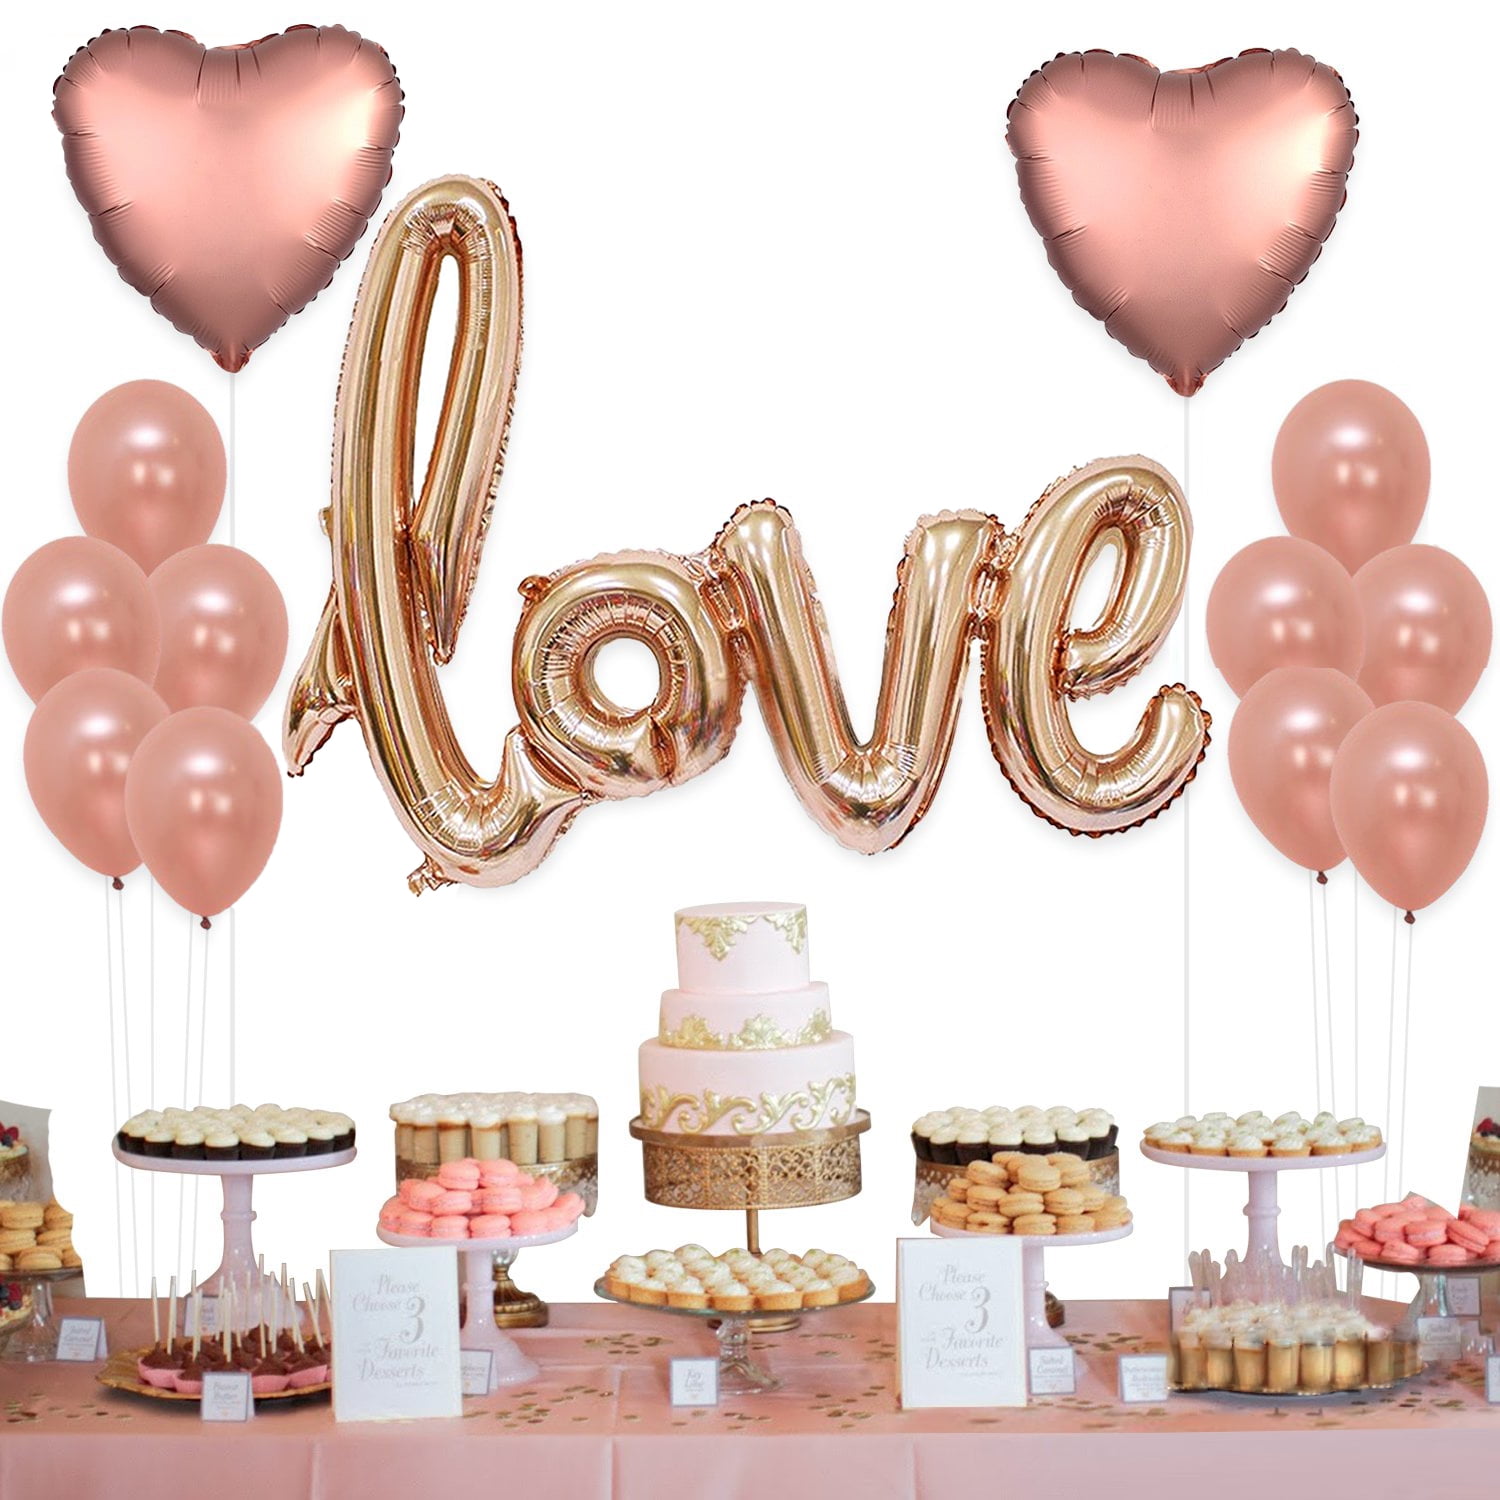 18" inch Heart Balloon Decoration Supplies Birthday Party Valentine's LoveUK